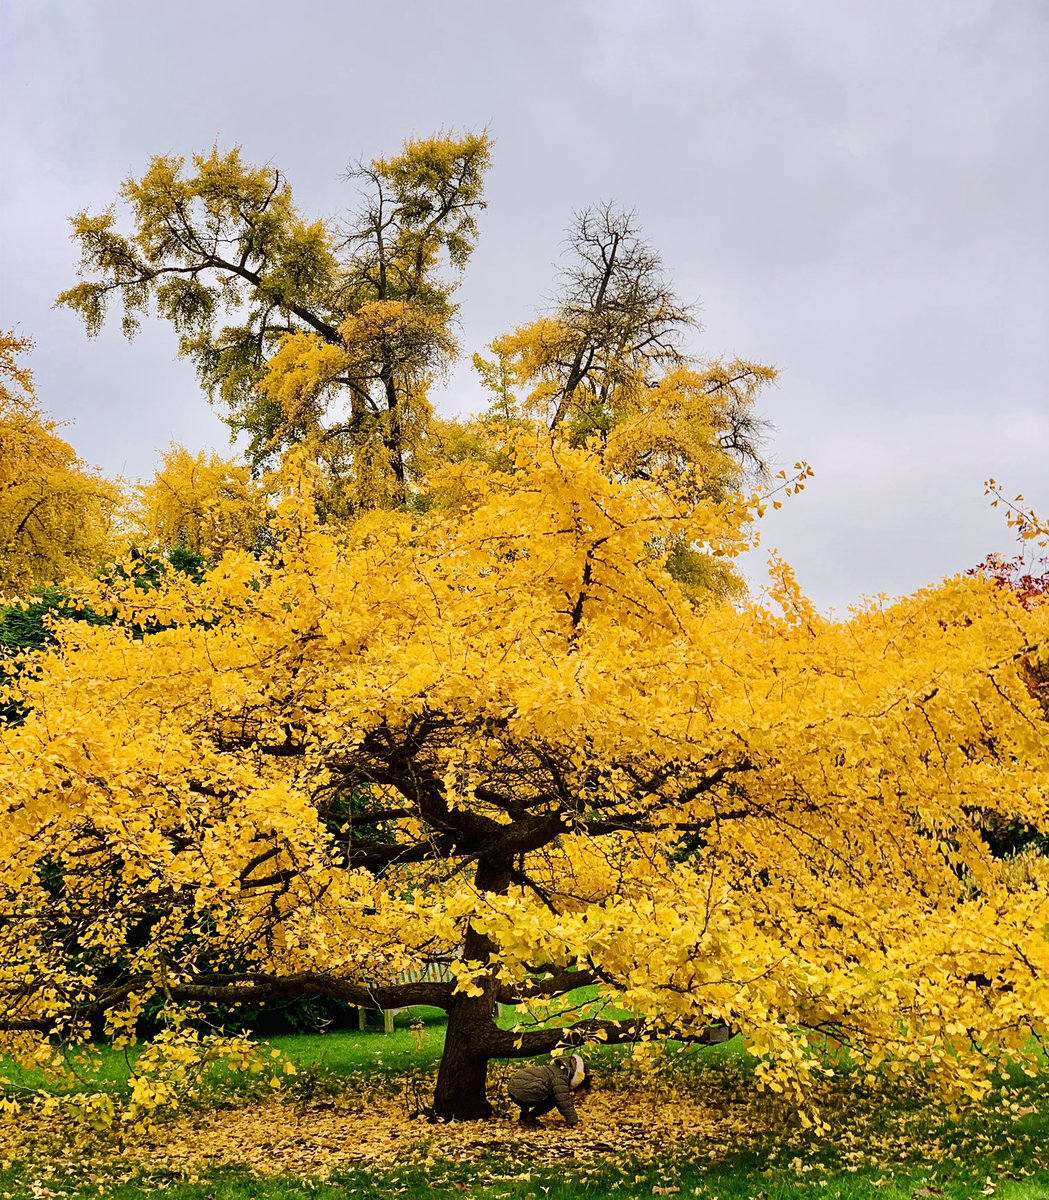 The Golden Tree! @kewgardens @SallyWeather @ThePhotoHour @LensAreLive @AP_Magazine @itvweather @bbcweather #Autumn #Colours #goldentree #mobilephotography #iPhone #nature #NaturePhotography #lovelondon #VisitLondon #VisitUK #botanicalgarden #beautiful